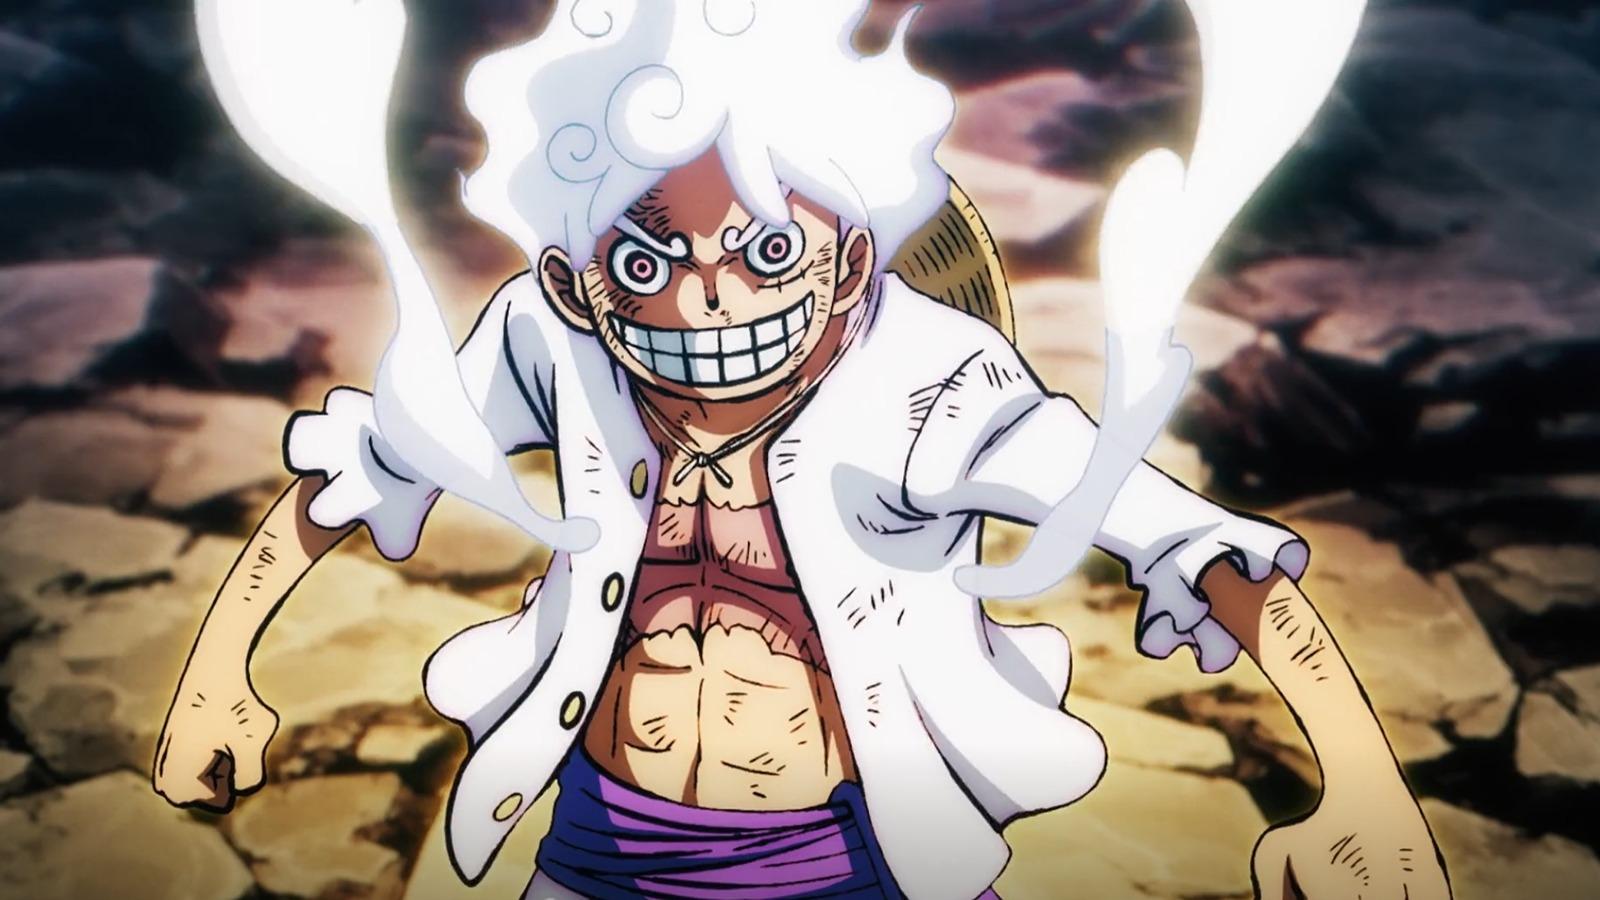 One Piece: Complete Gear 5 anime release schedule explained - Dexerto